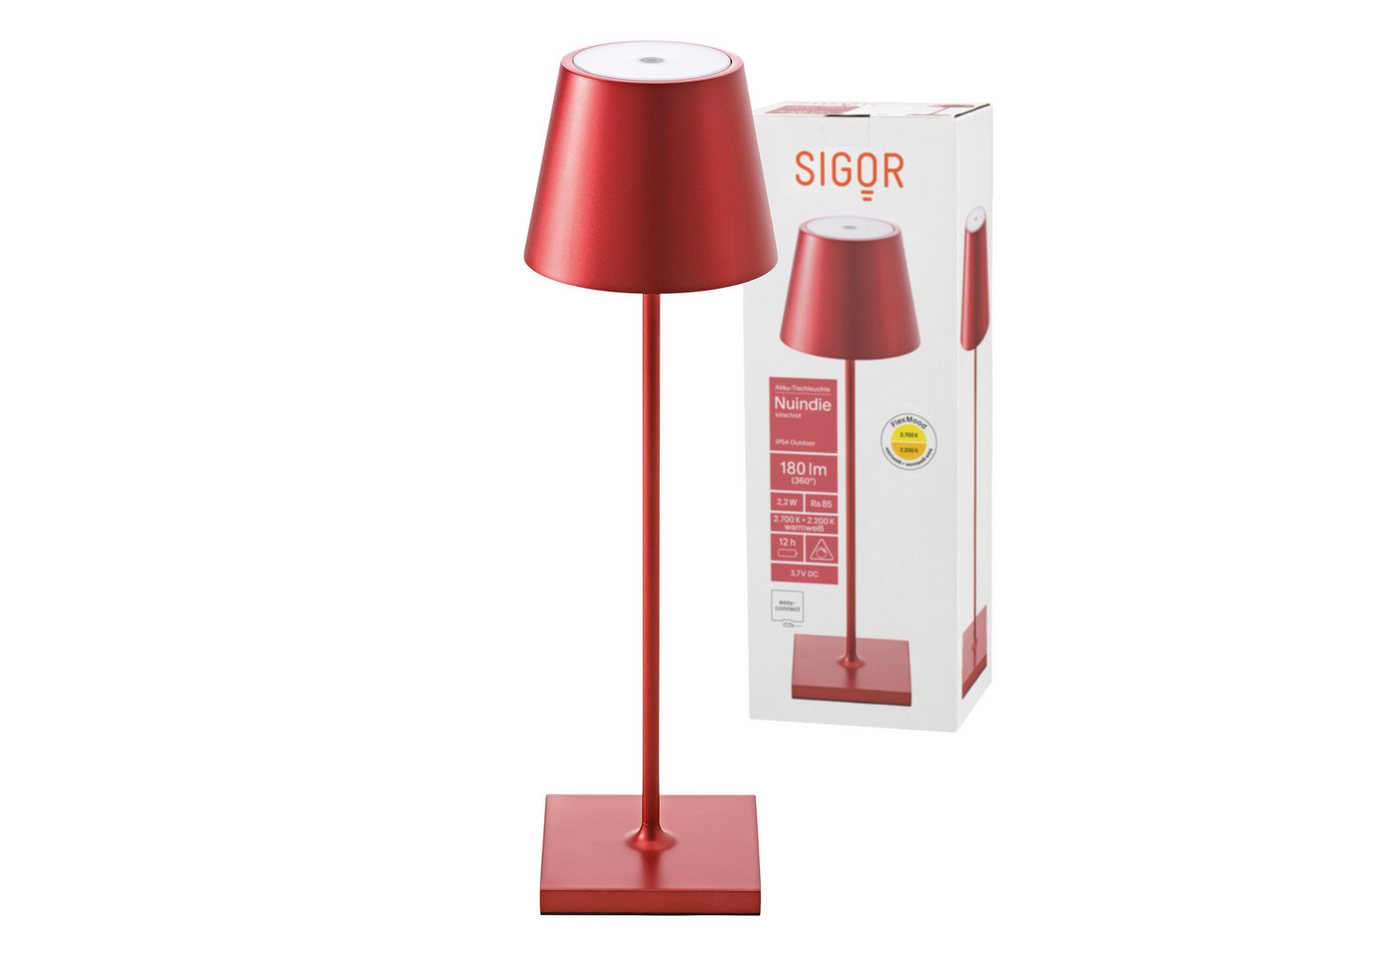 SIGOR LED Tischleuchte Stilvolle Akku-Tischlampe Nuindie Eloxiert, LED fest integriert, Warmweiß, Extra-Warmweiß, kabellose Tischleuchte, 38x10x10 cm von Sigor